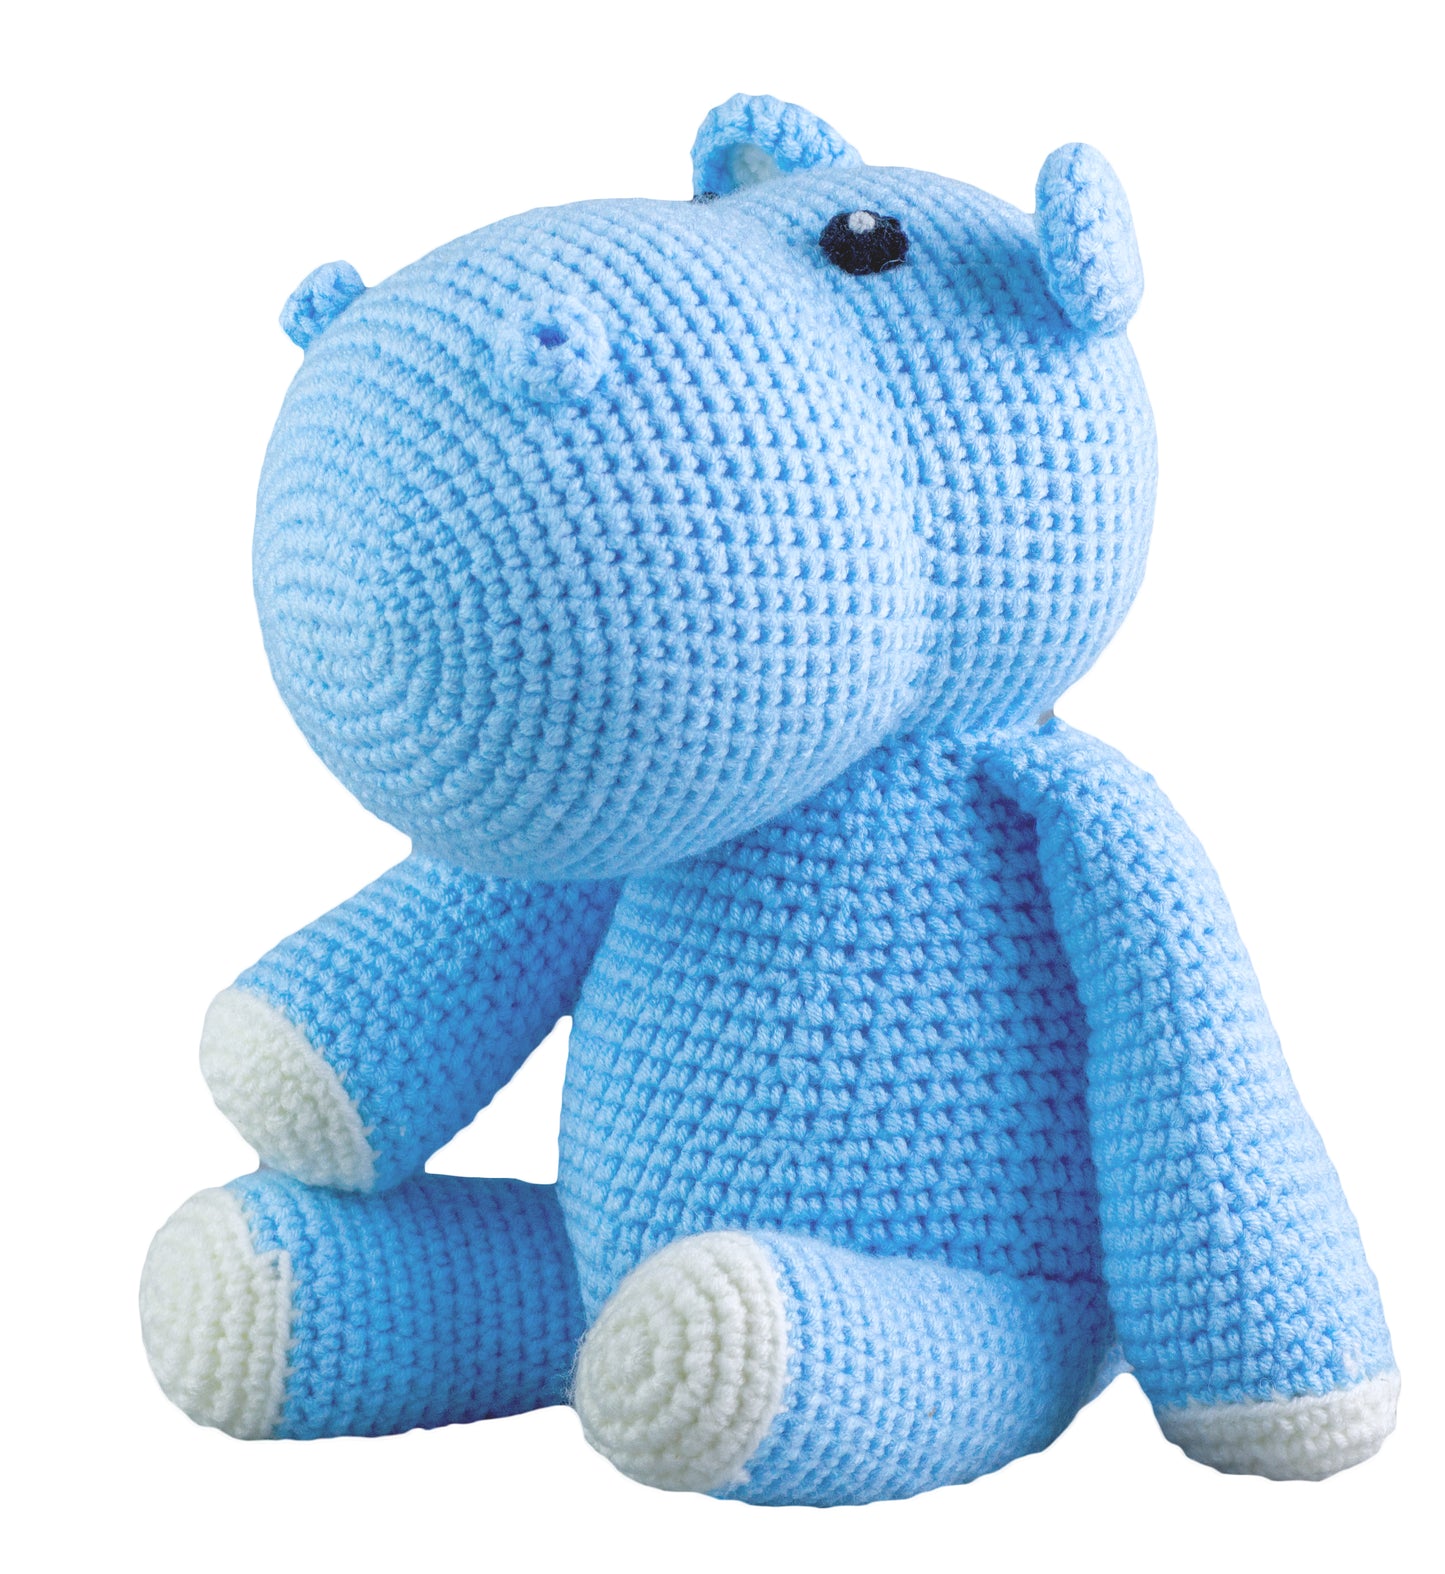 Hippo crochet